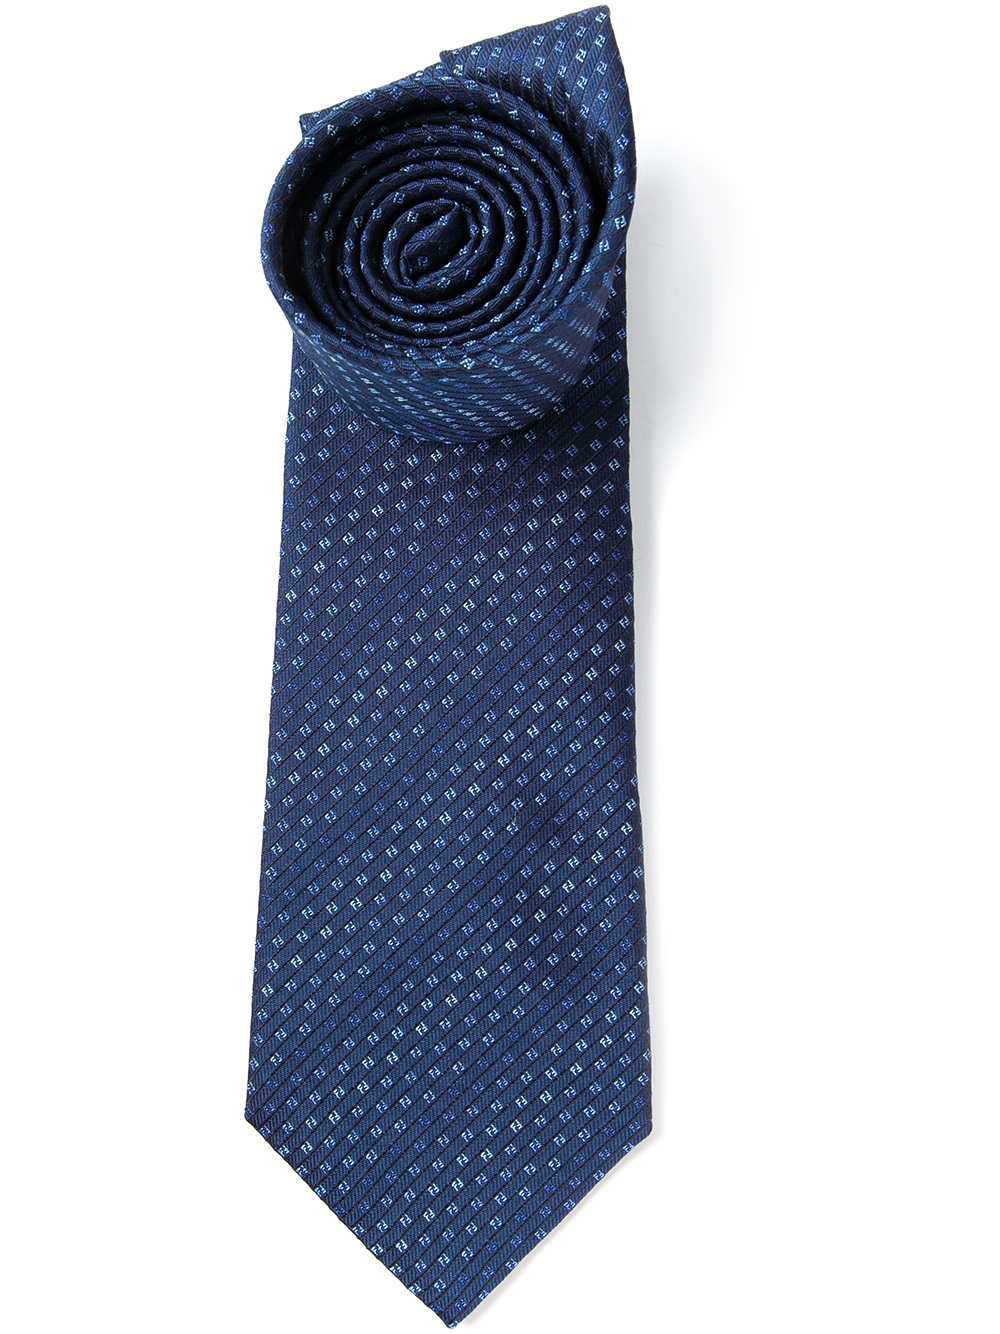 Lyst - Fendi Monogram Print Tie in Blue for Men